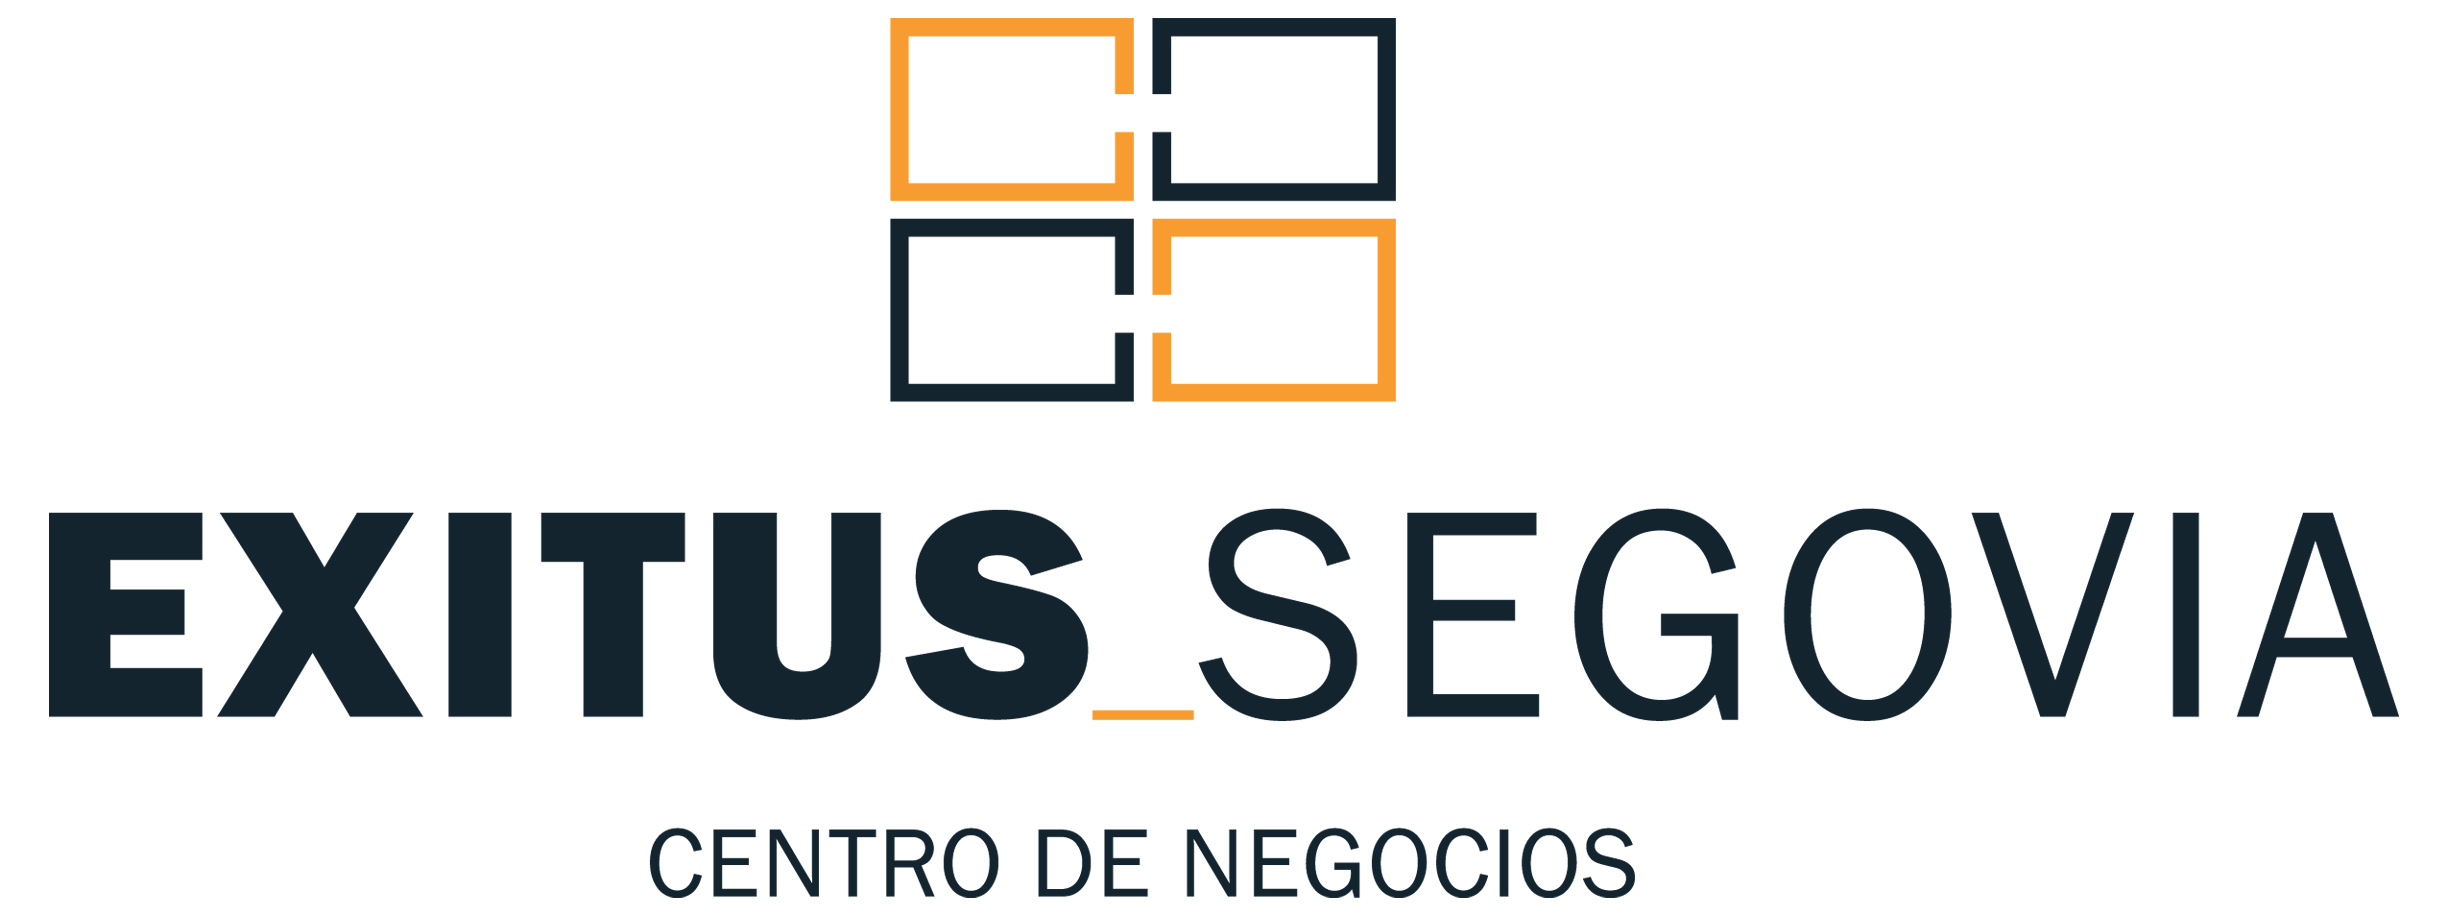 CENTRO DE NEGOCIOS EXITUS SEGOVIA